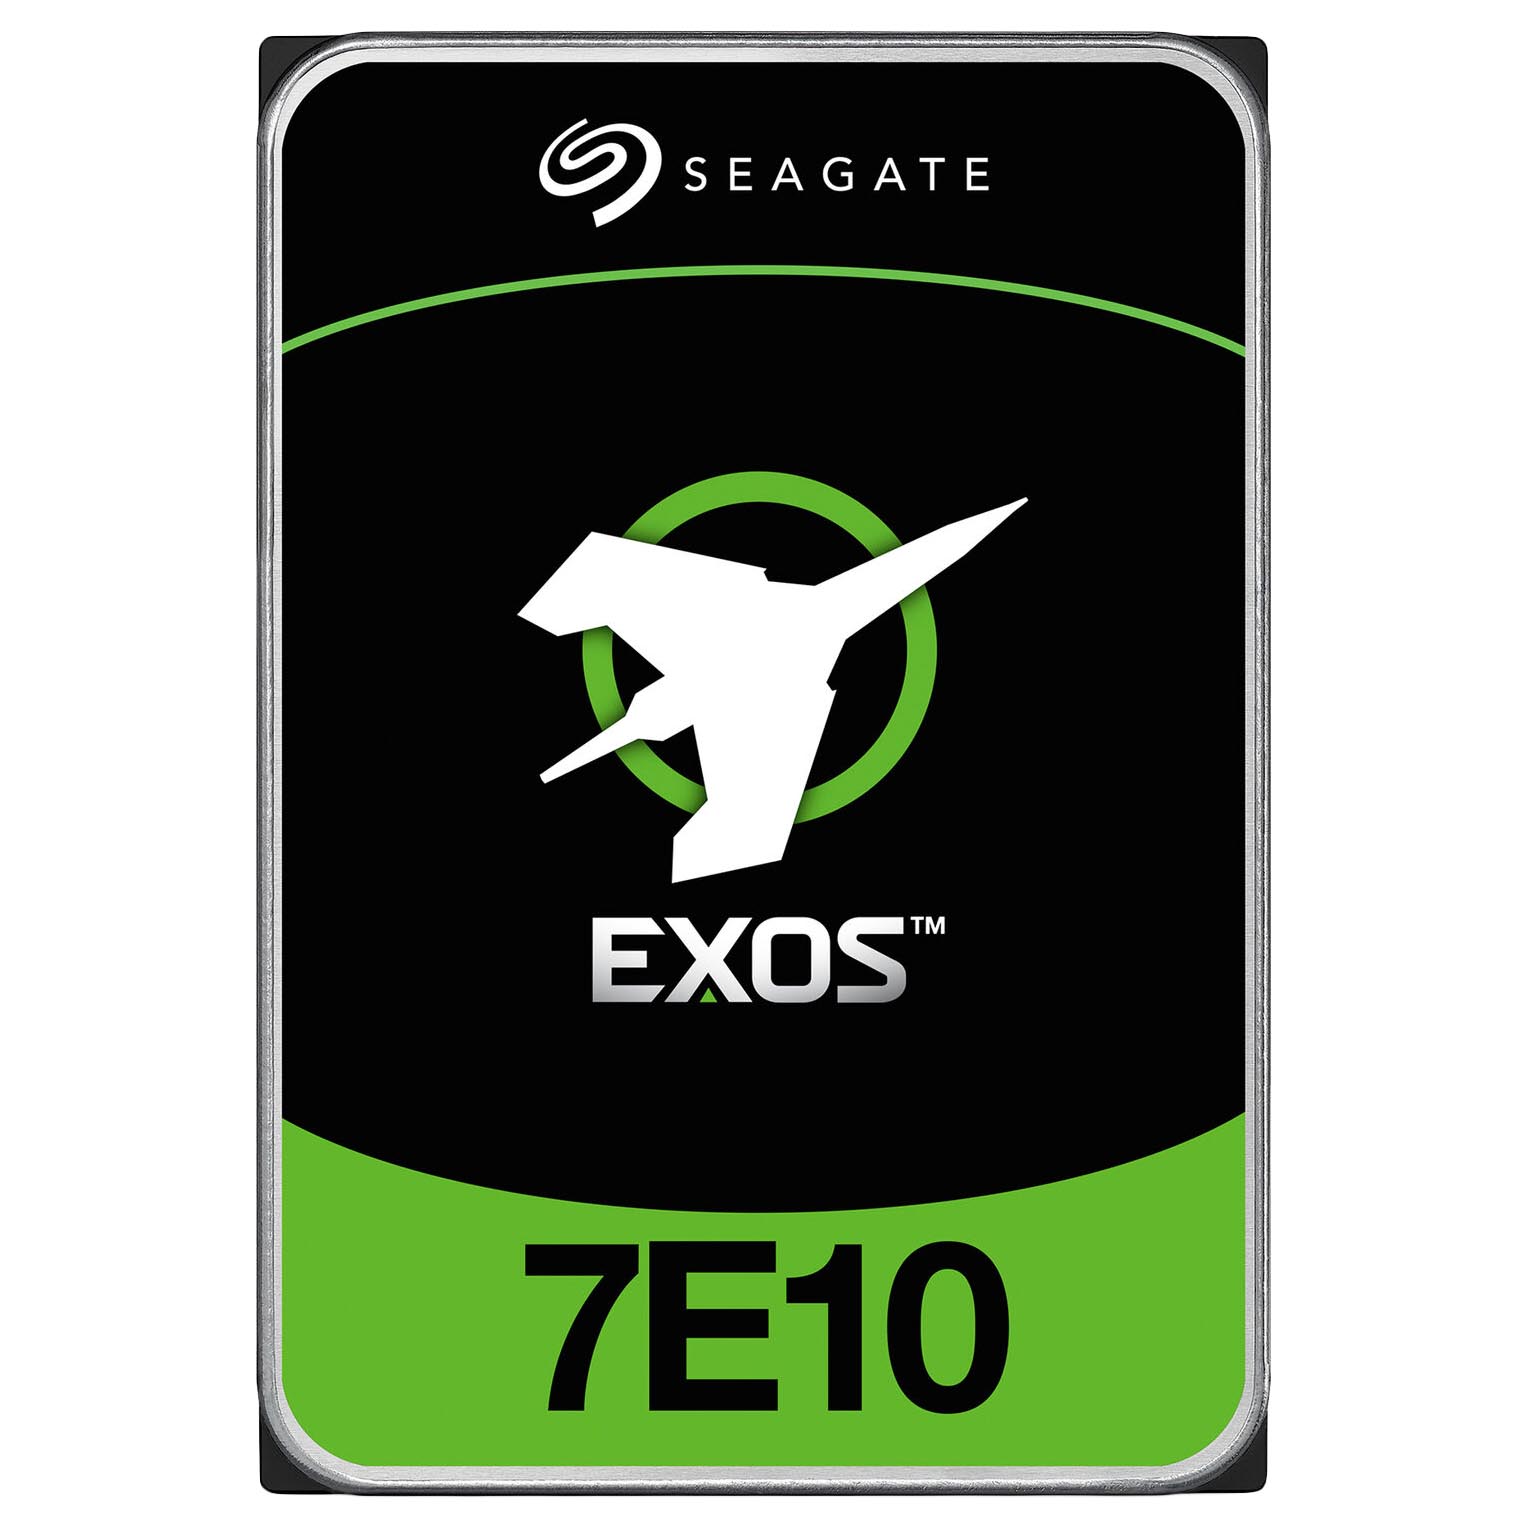 Внутренний жесткий диск Seagate Exos 7E10, ST2000NM001B, 2 Тб жесткий диск seagate exos 7e10 2 тб st2000nm001b